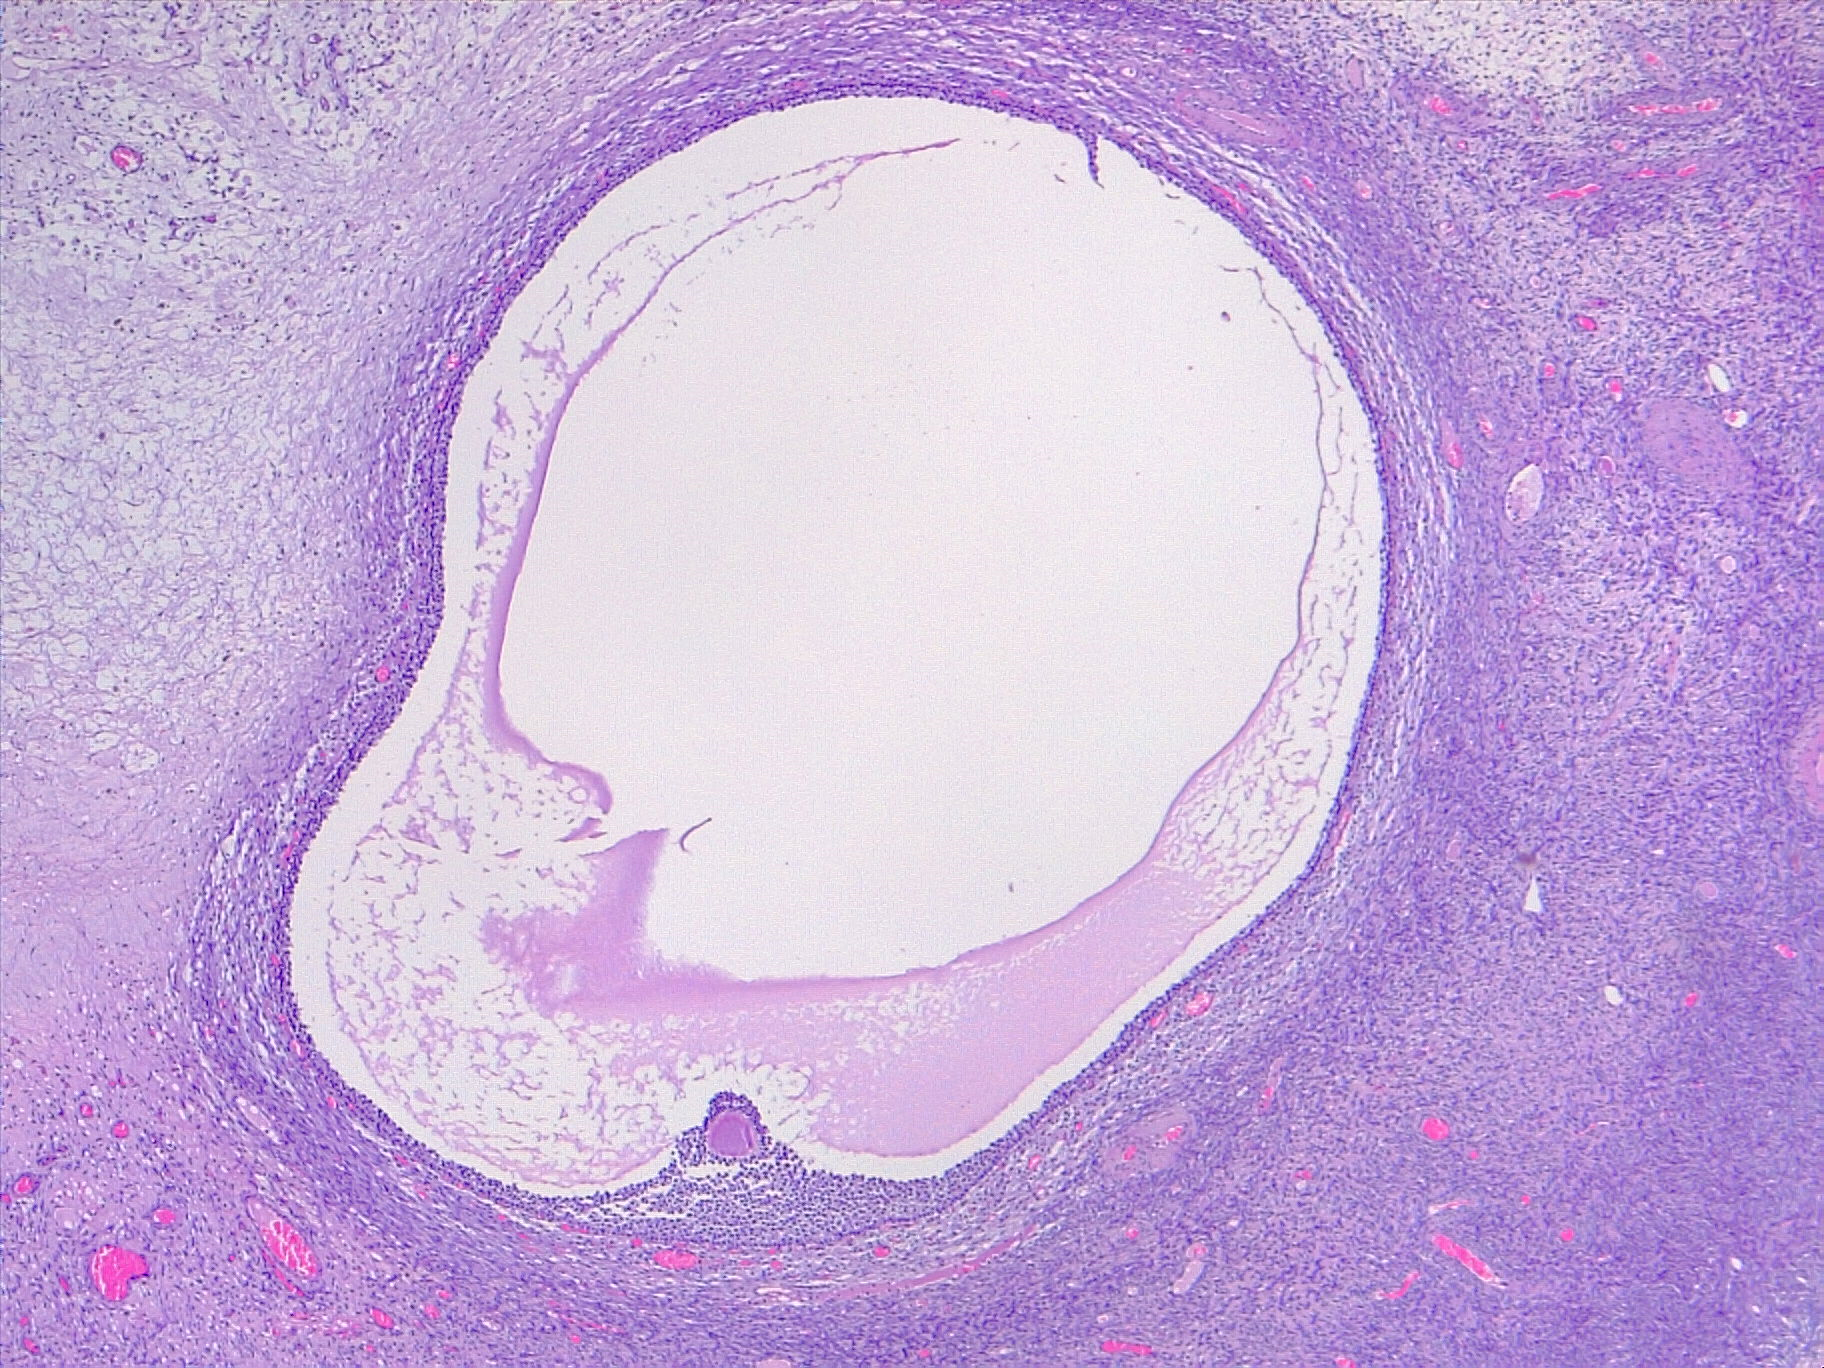 Ovarian follicle in maturation, cystic mature follicle.